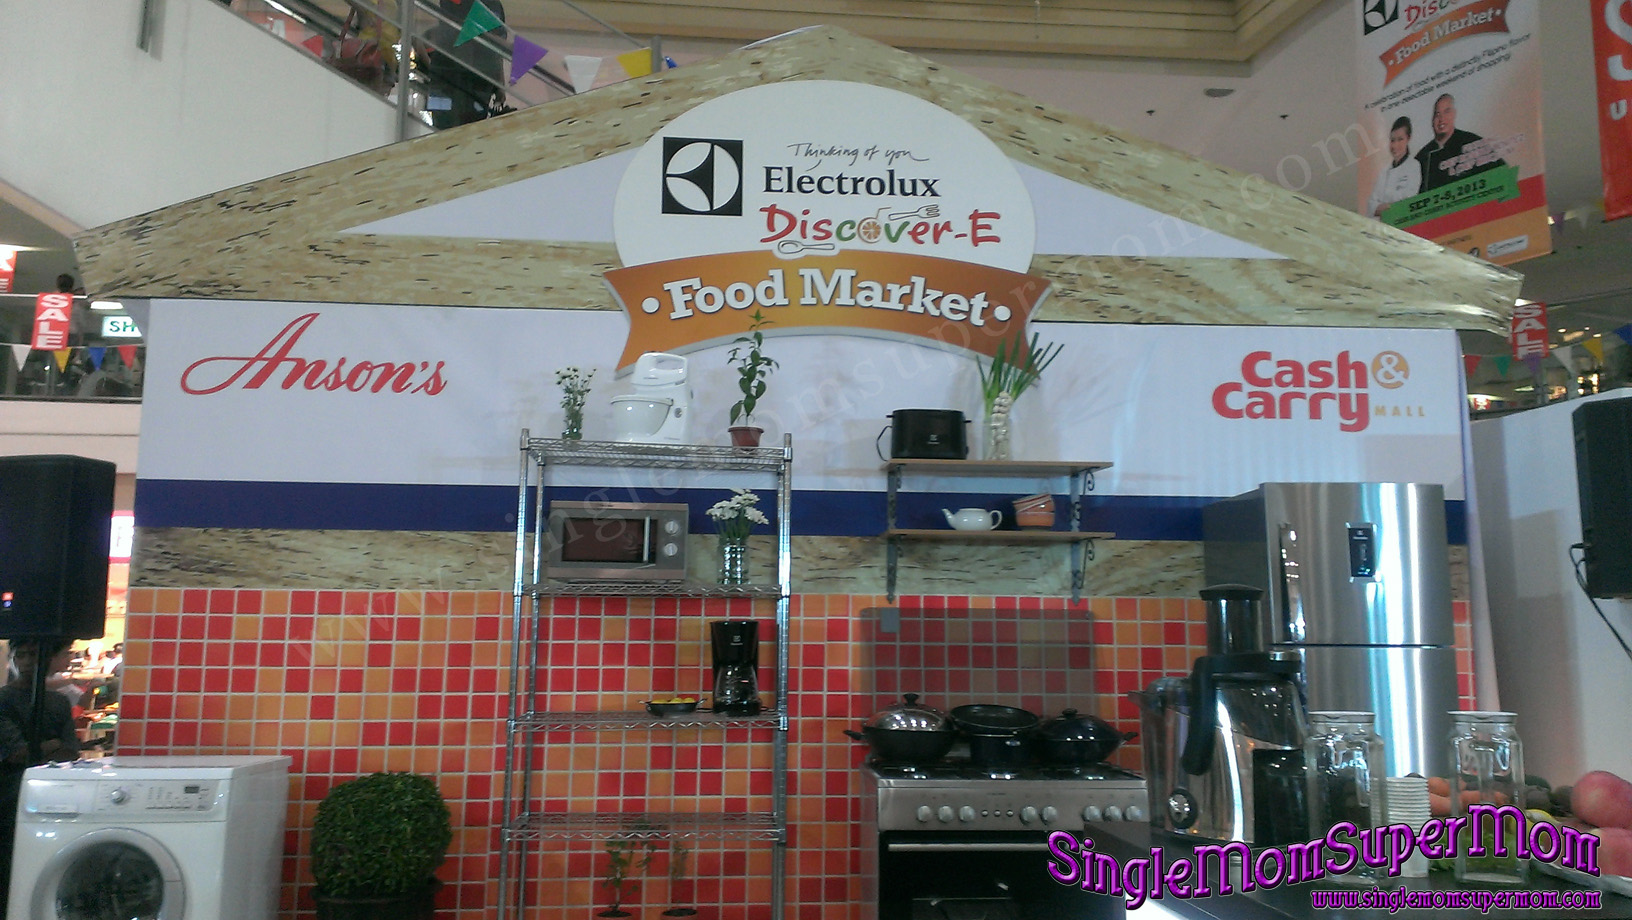 Electrolux Discover-E Food Market Cash & Carry